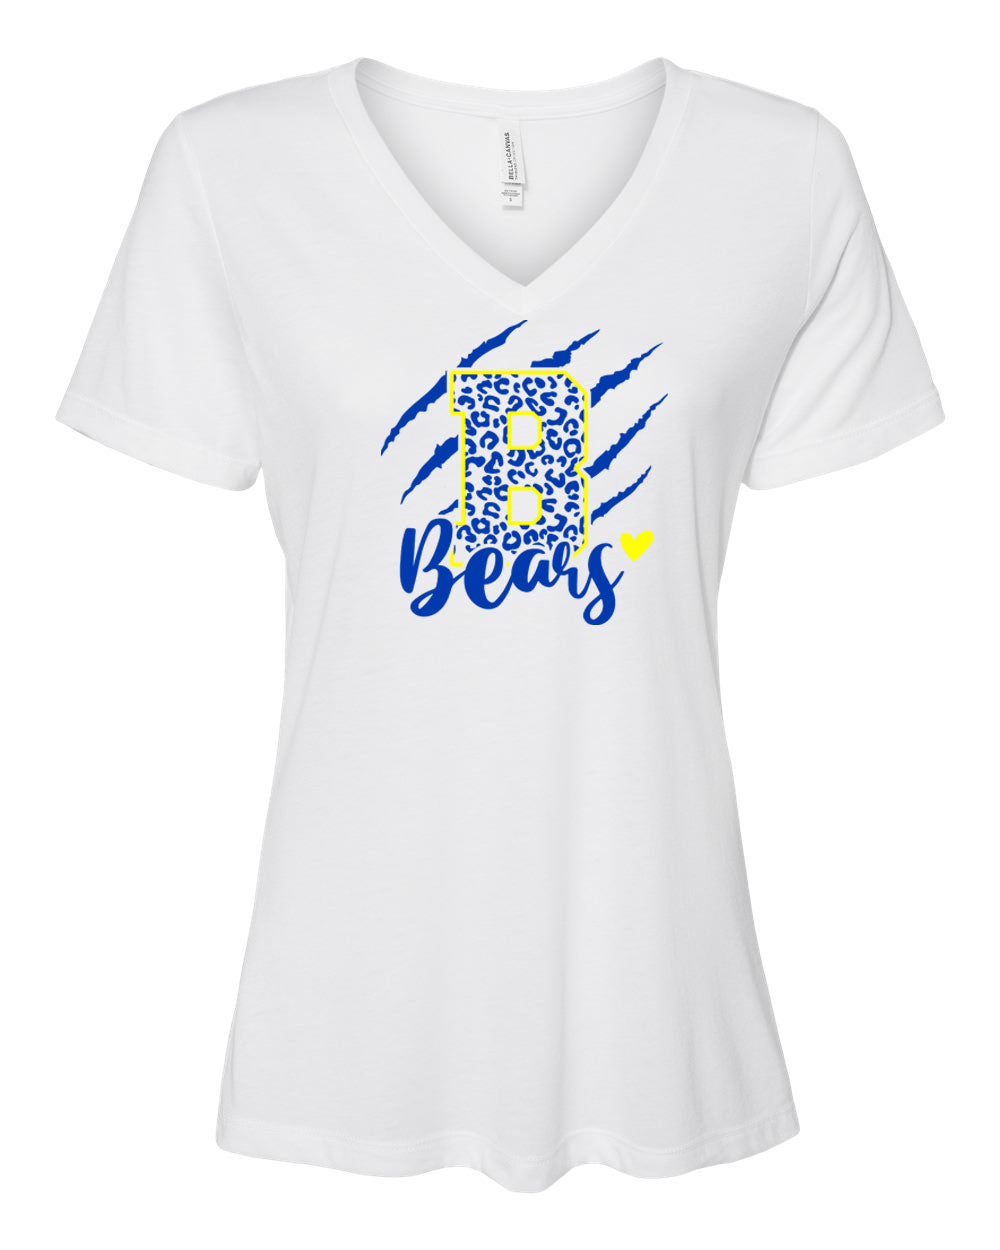 Blairstown Bears Design 11 V-neck T-Shirt